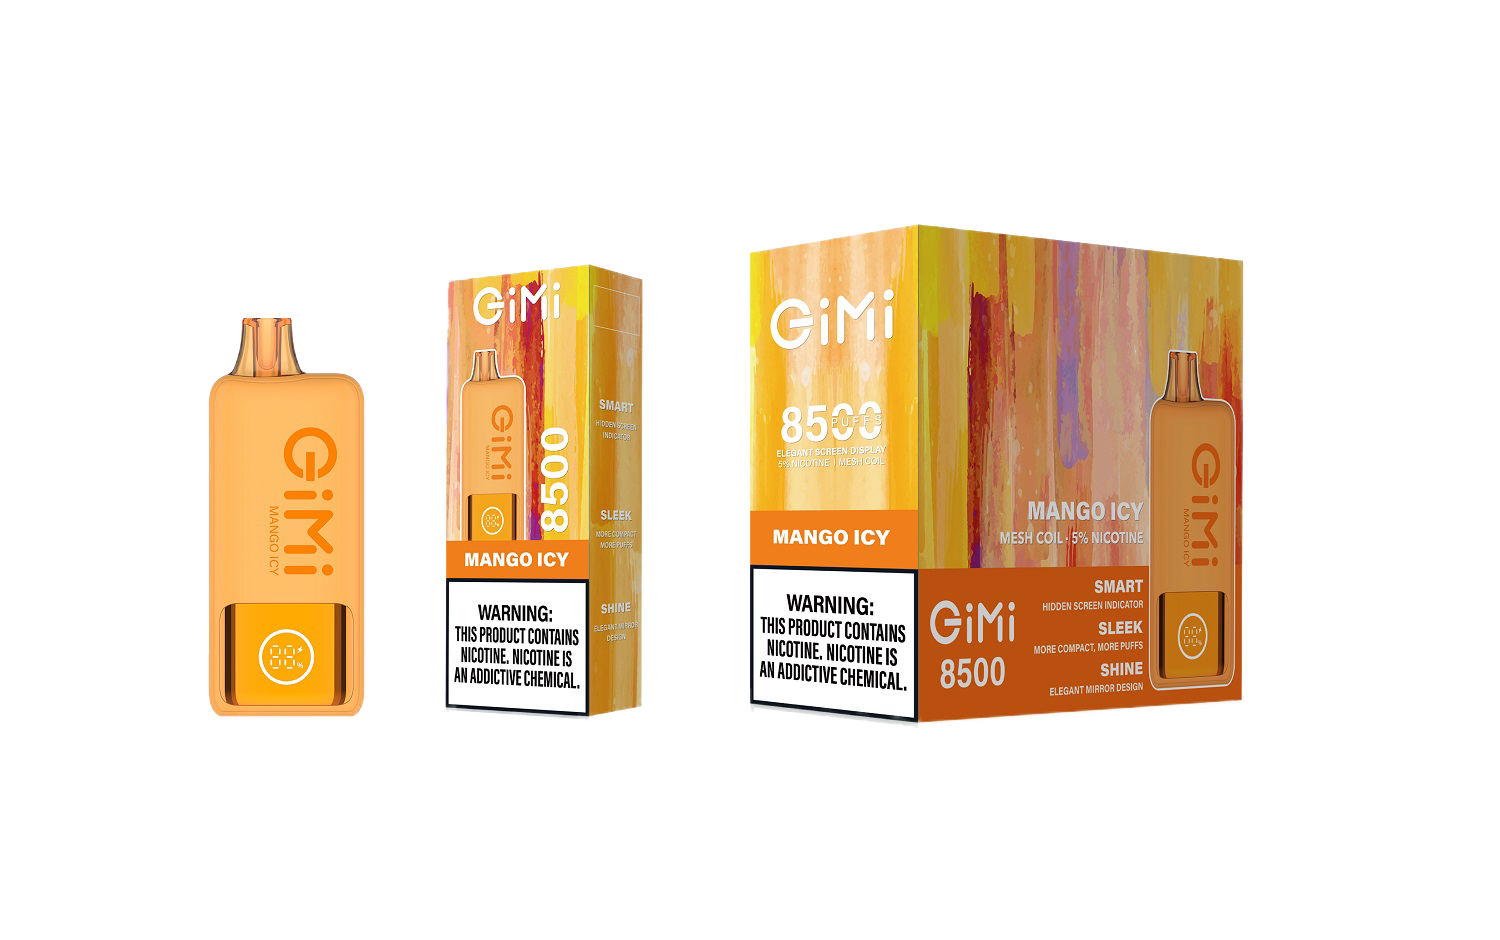 FLUM GIMI 8500 Puffs Smart Disposable Vape 5% Nicotine - Mango Icy